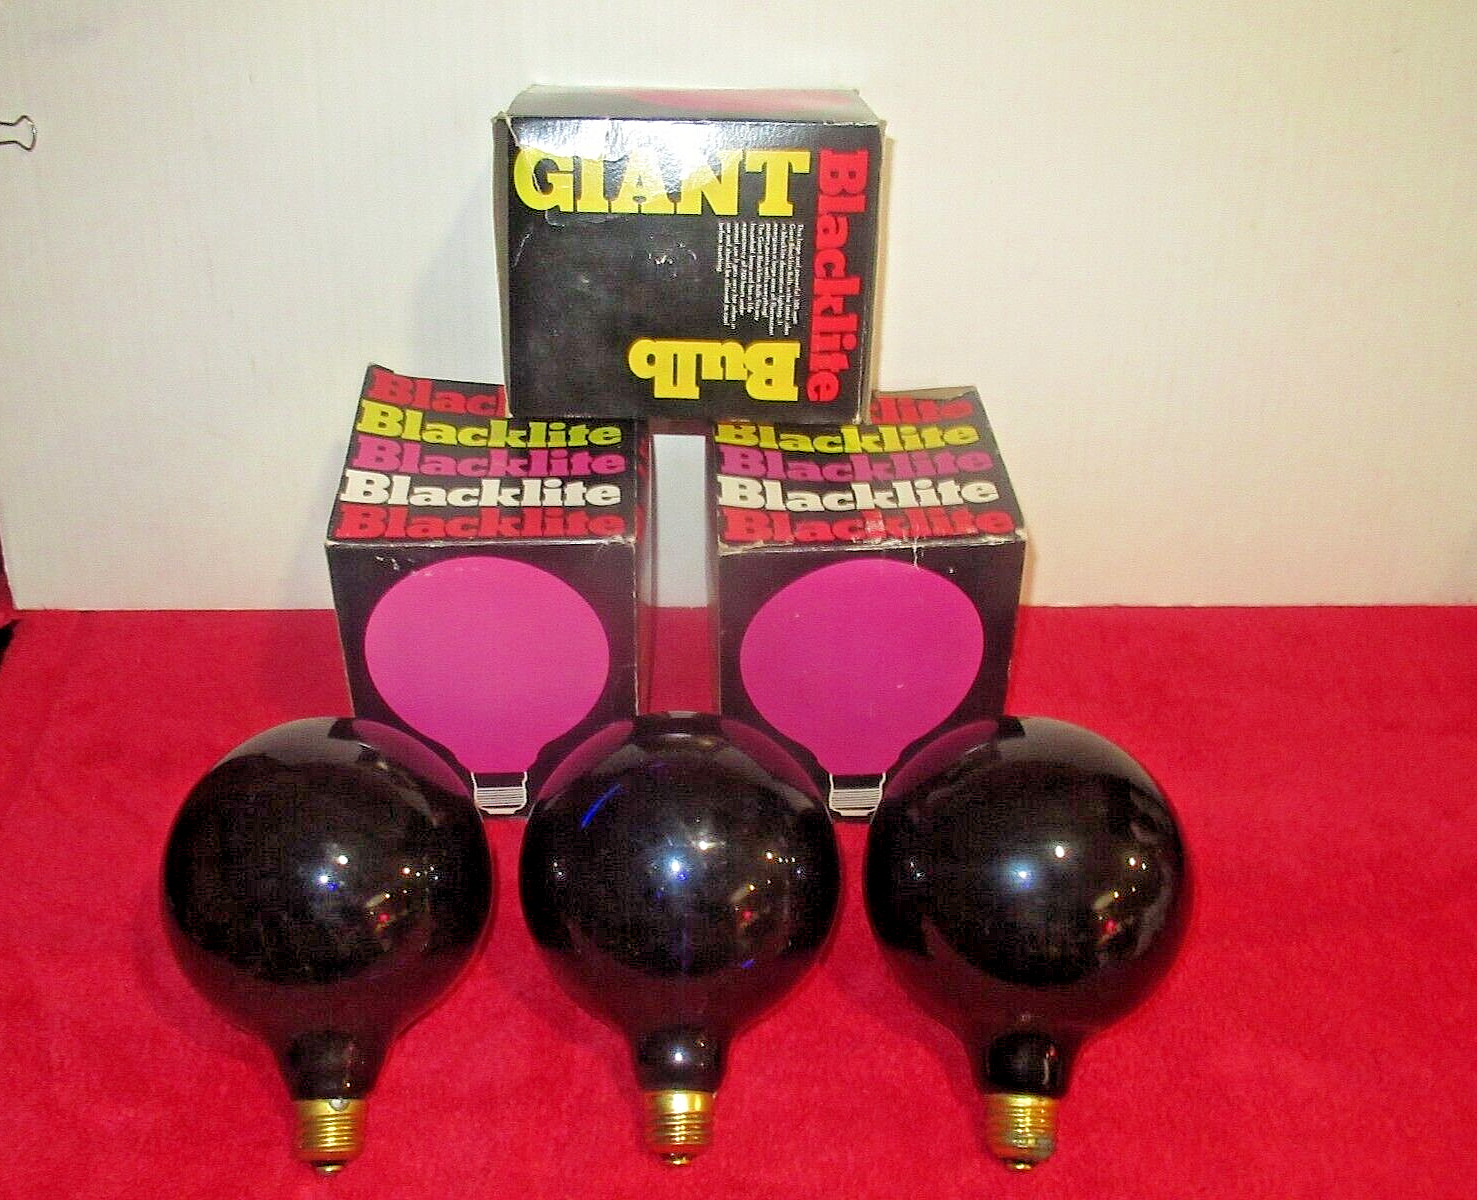 3 RARE Vintage 1990s Spencer Gifts Giant Blacklite Black Light Bulb 100W Tested